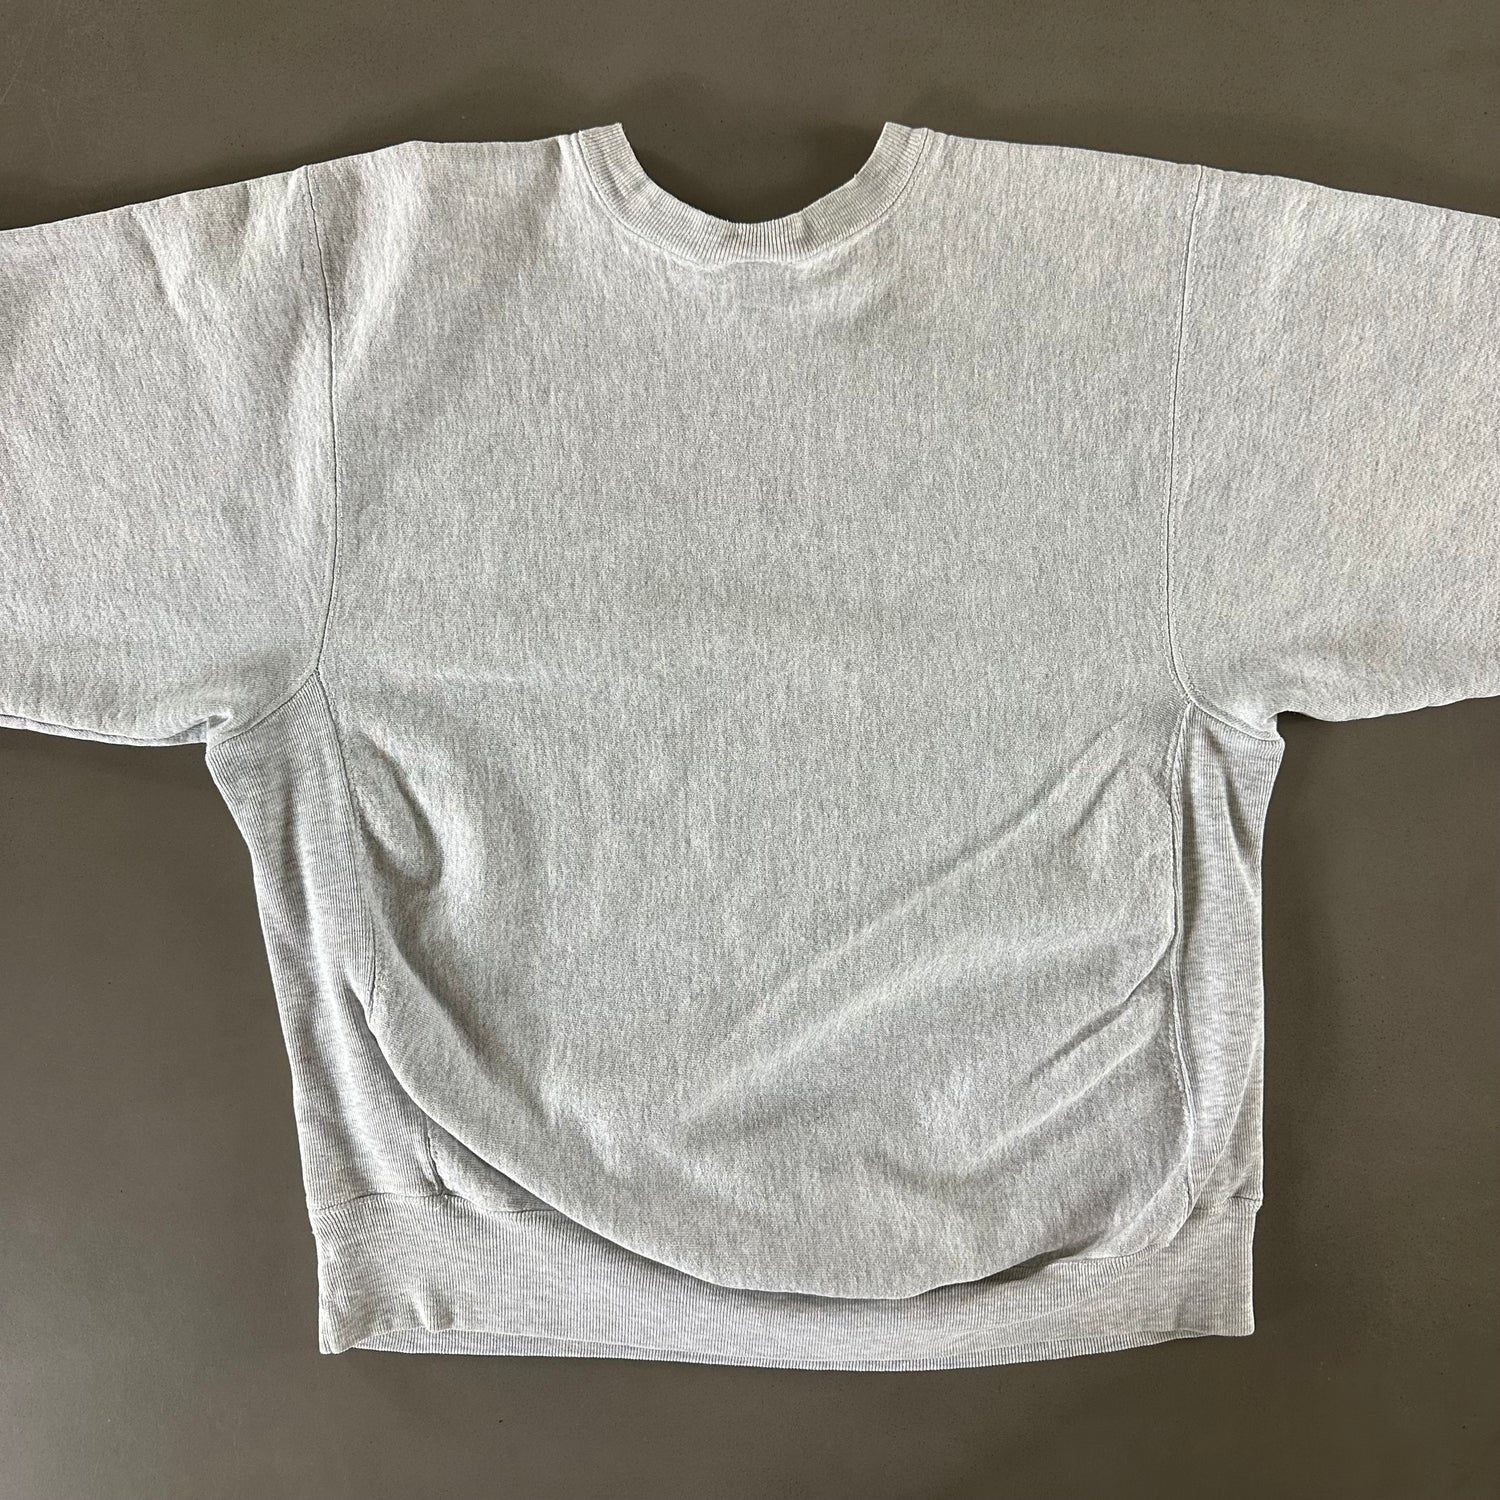 Vintage 1990s Syracuse University Sweatshirt size XL